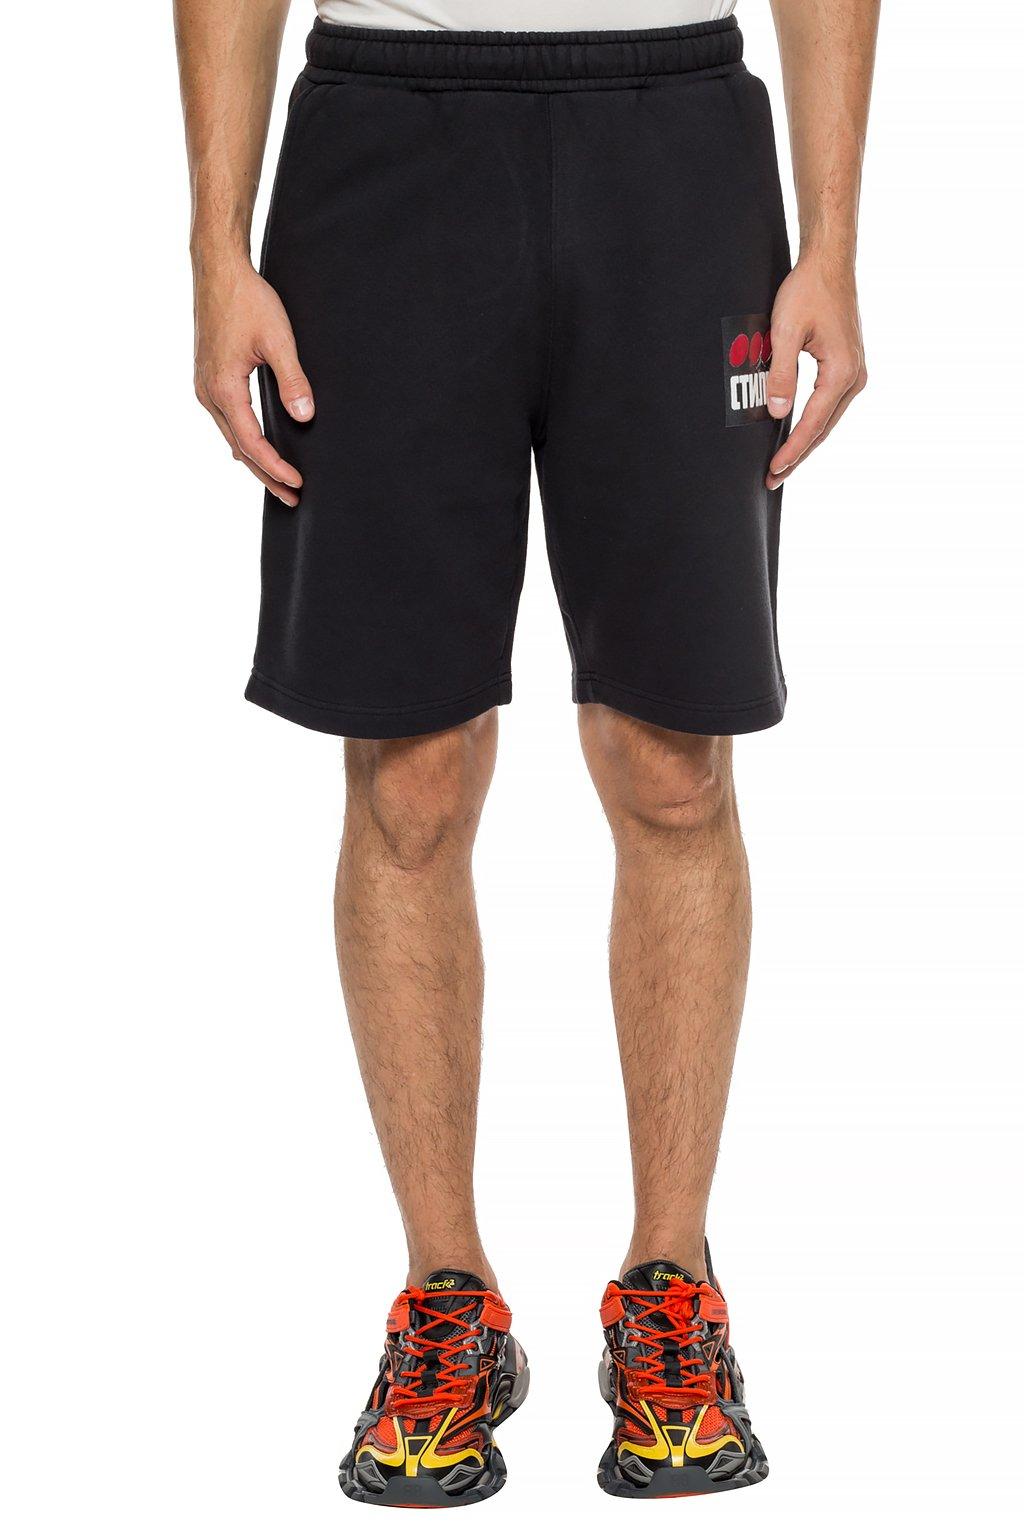 Heron Preston Cotton Logo Shorts in Black for Men - Lyst